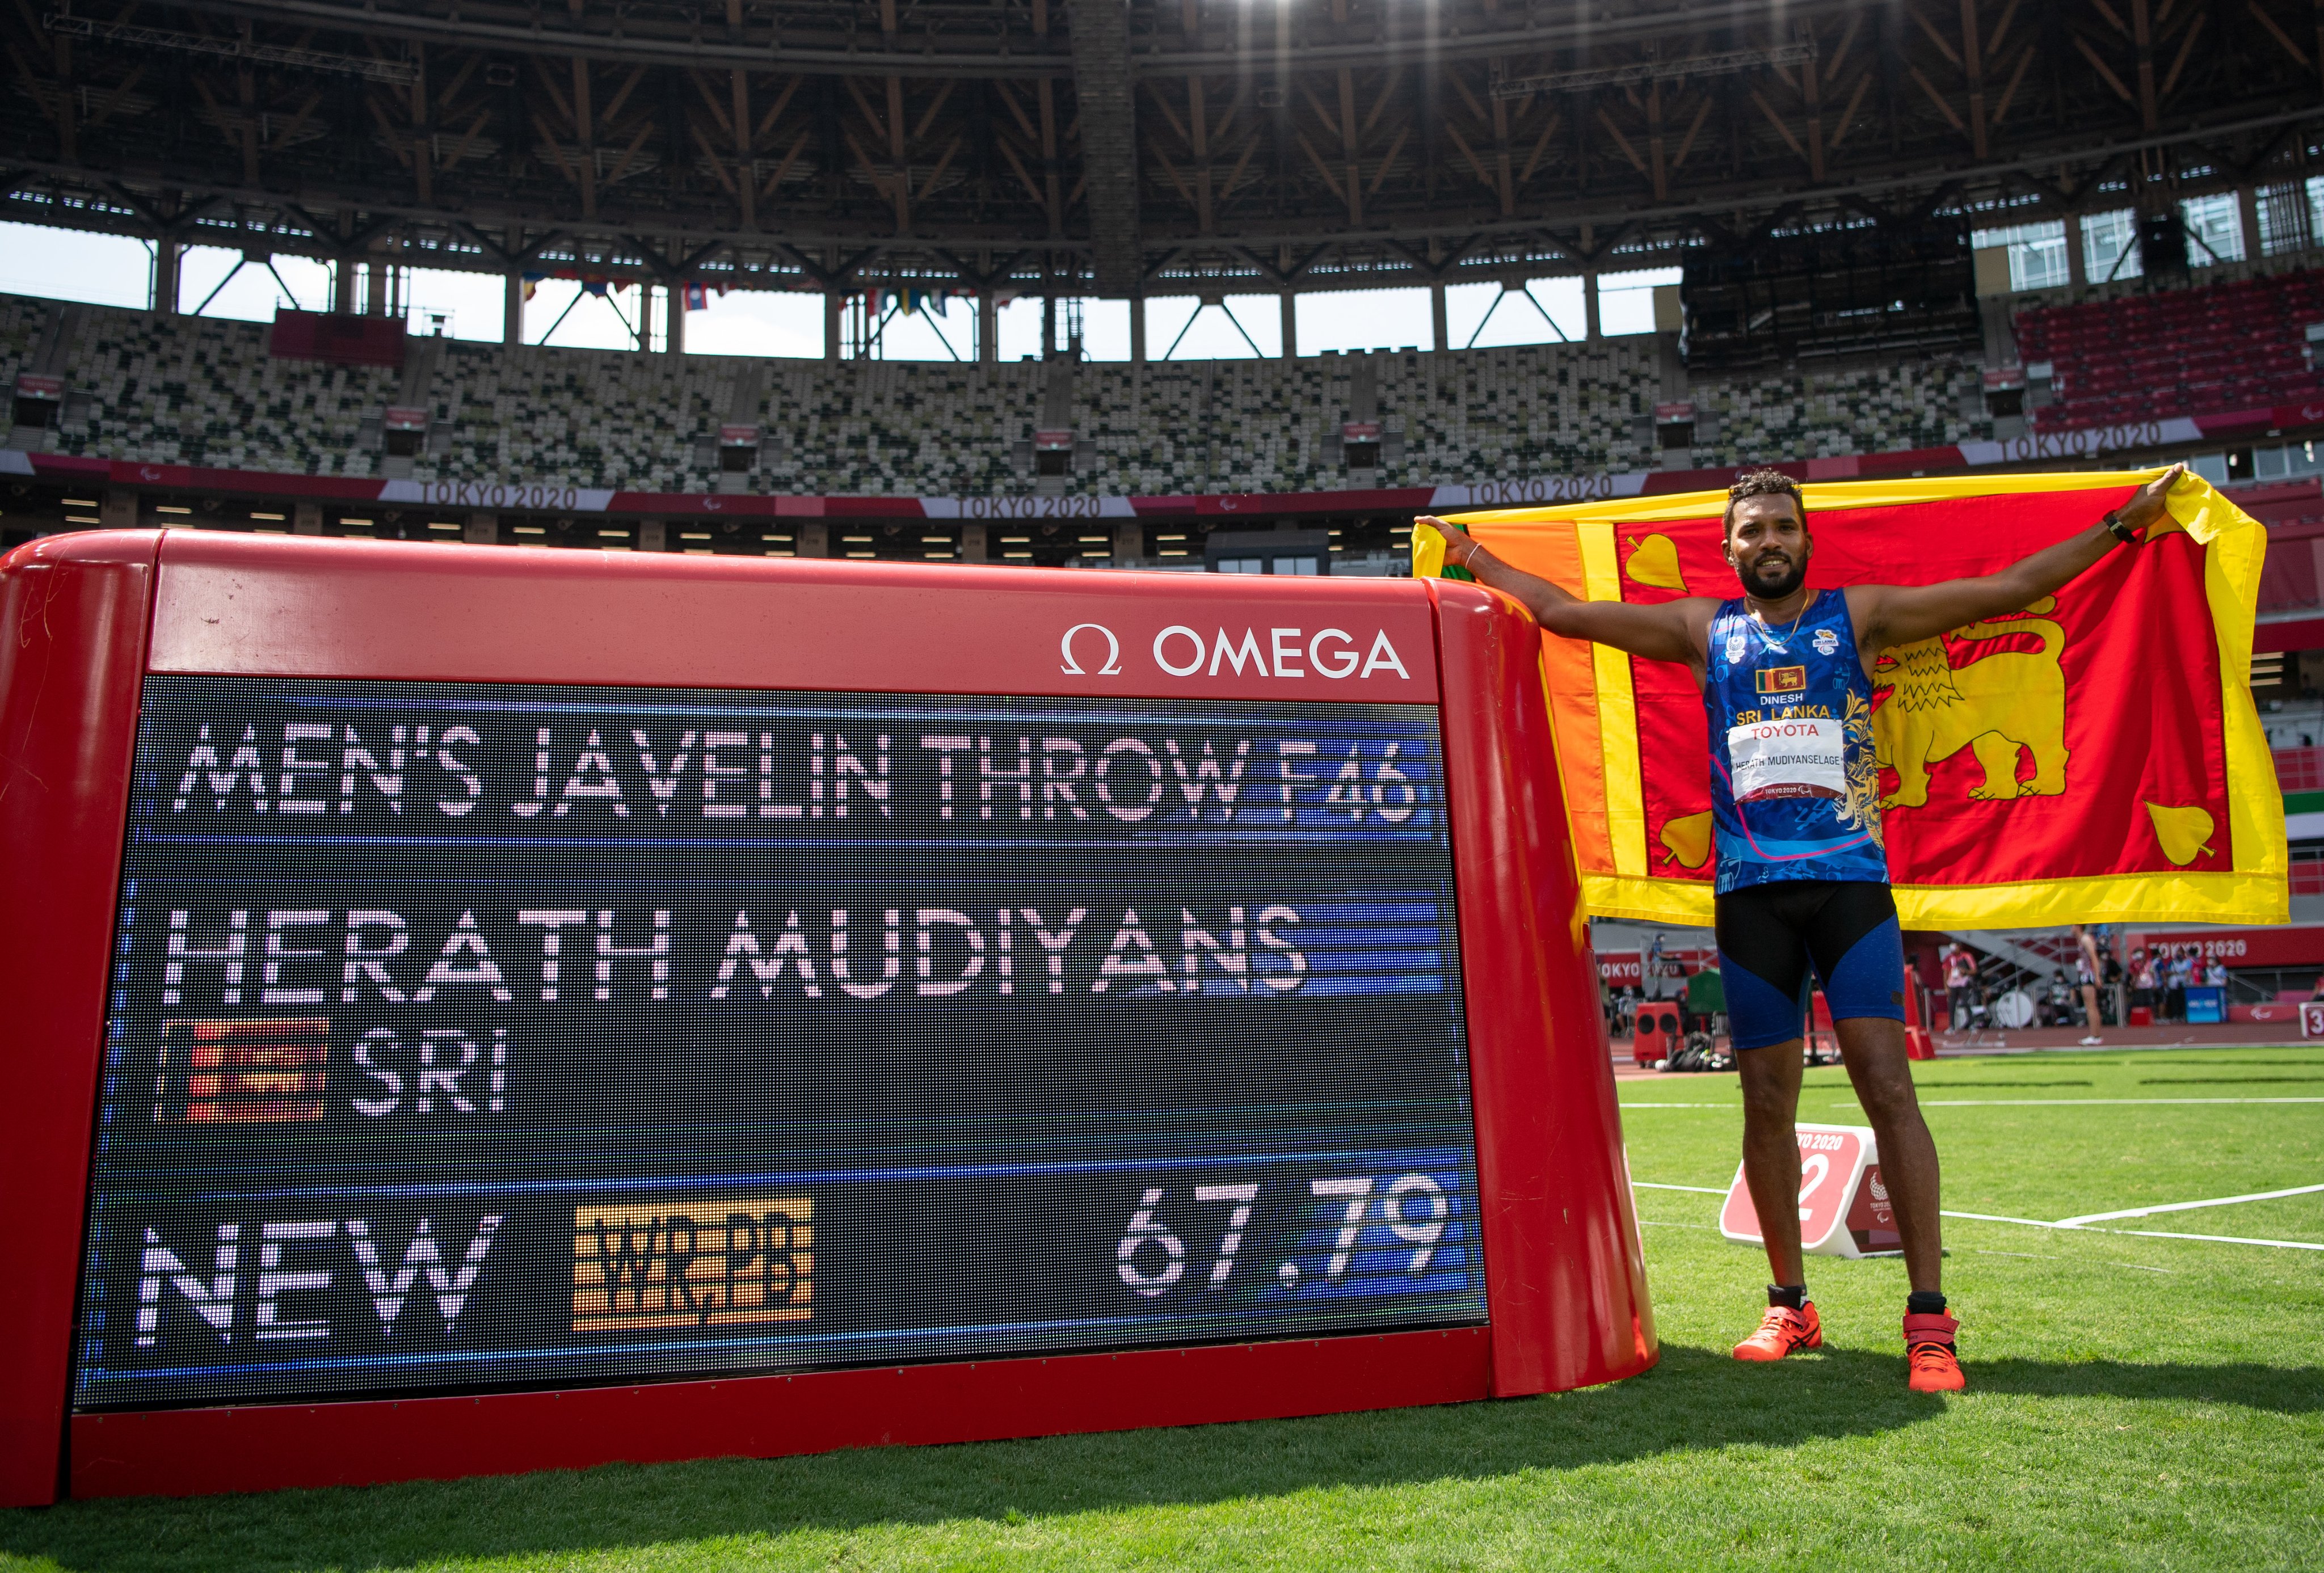 Herath Mudiyansalage Dinesh Priyantha celebrates winning gold with the Sri Lankan flag next to the scoreboard.